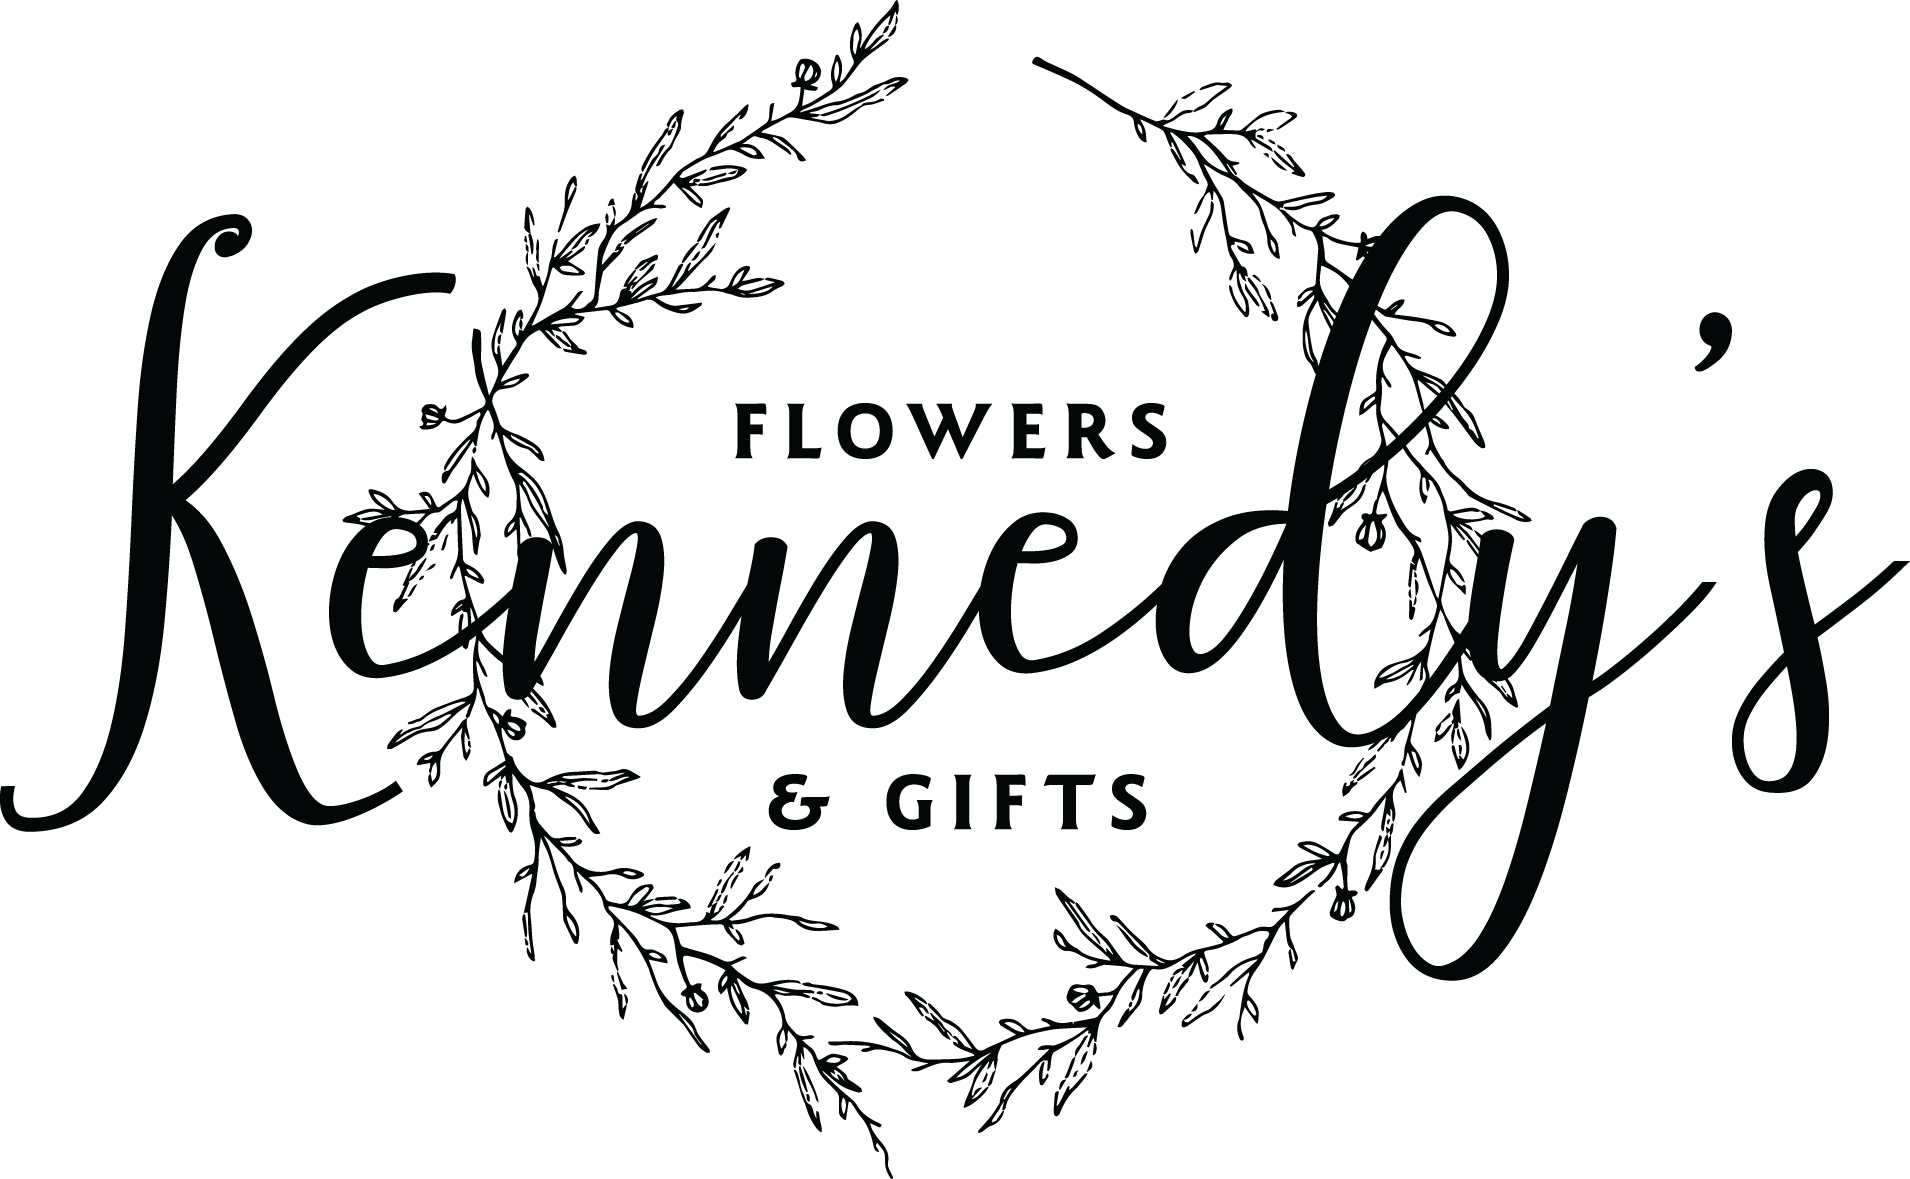 Kennedy's Flower Shop